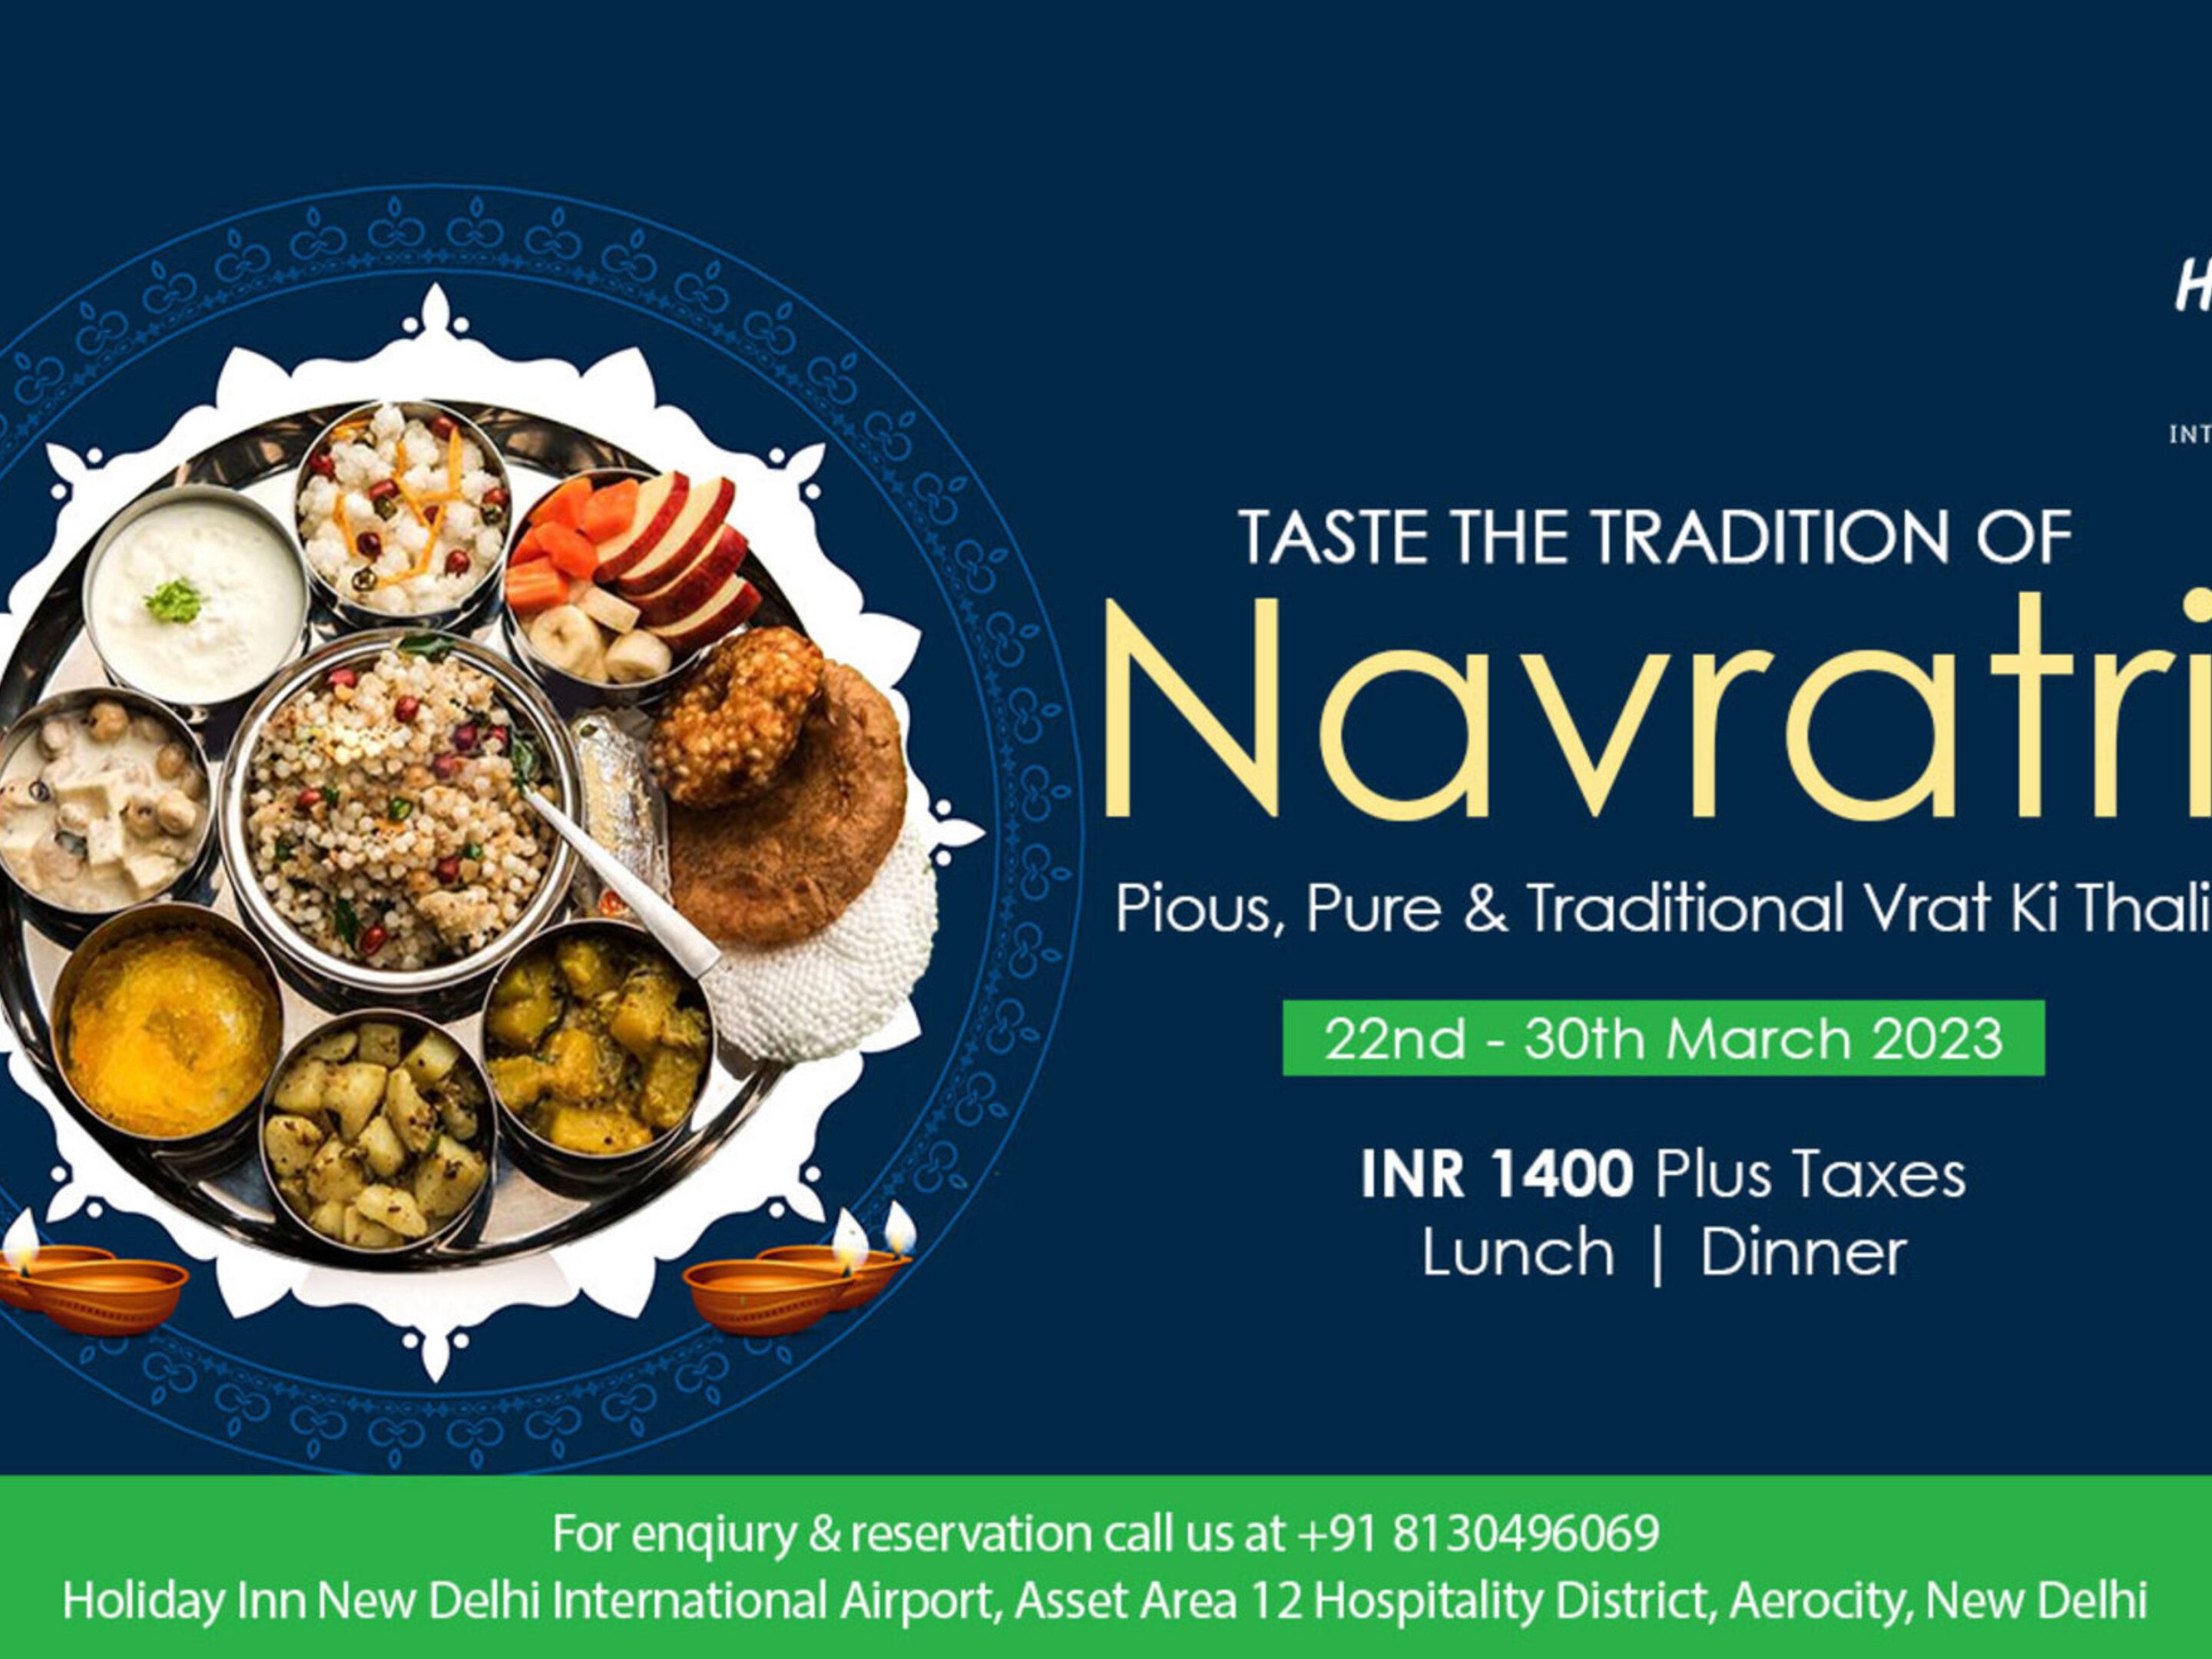 Taste the tradition of Navratri